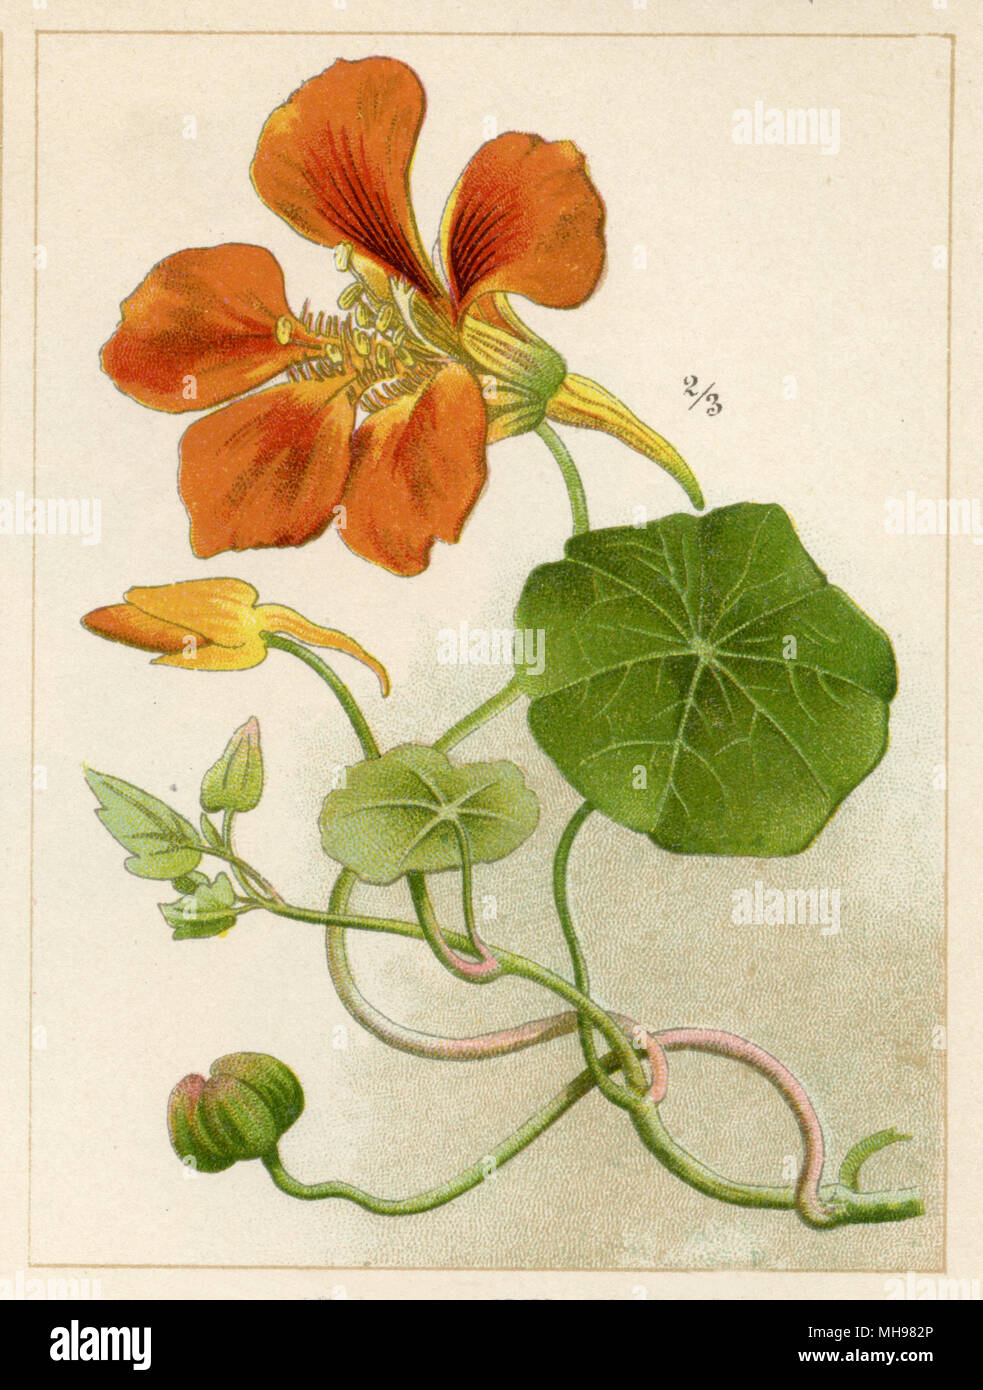 garden nasturtium, Indian cress or monks cress <Tropaeolum majus>, Stock Photo